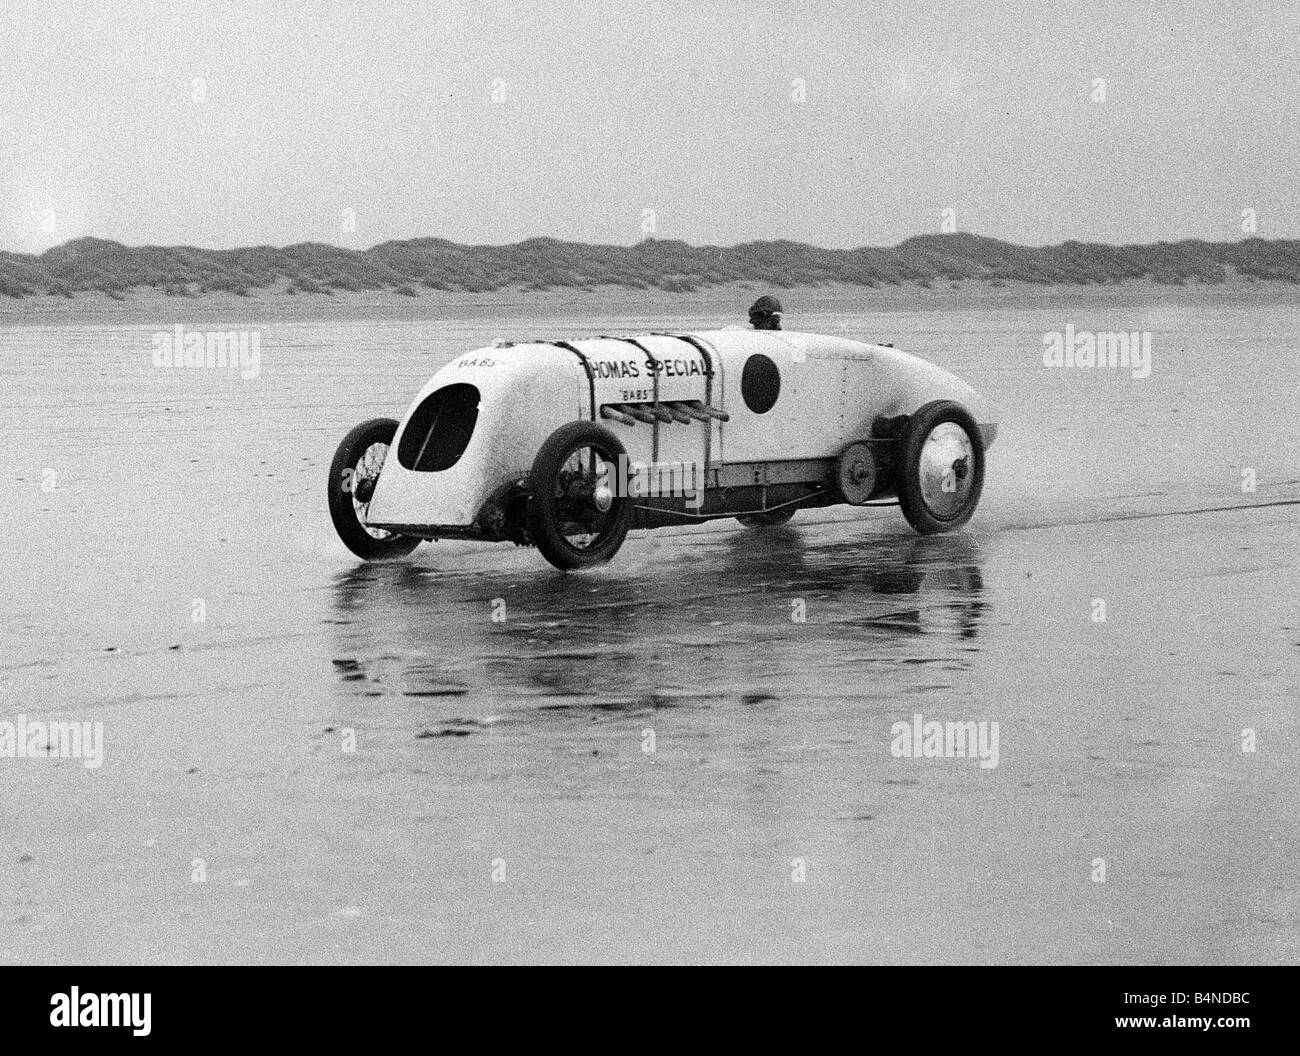 Herr J G P Thomas in seinem Thomas Special 400h p Auto auf Pendine Sands in South Wales Welt Land Speed Record Versuch Circa 1920 Stockfoto